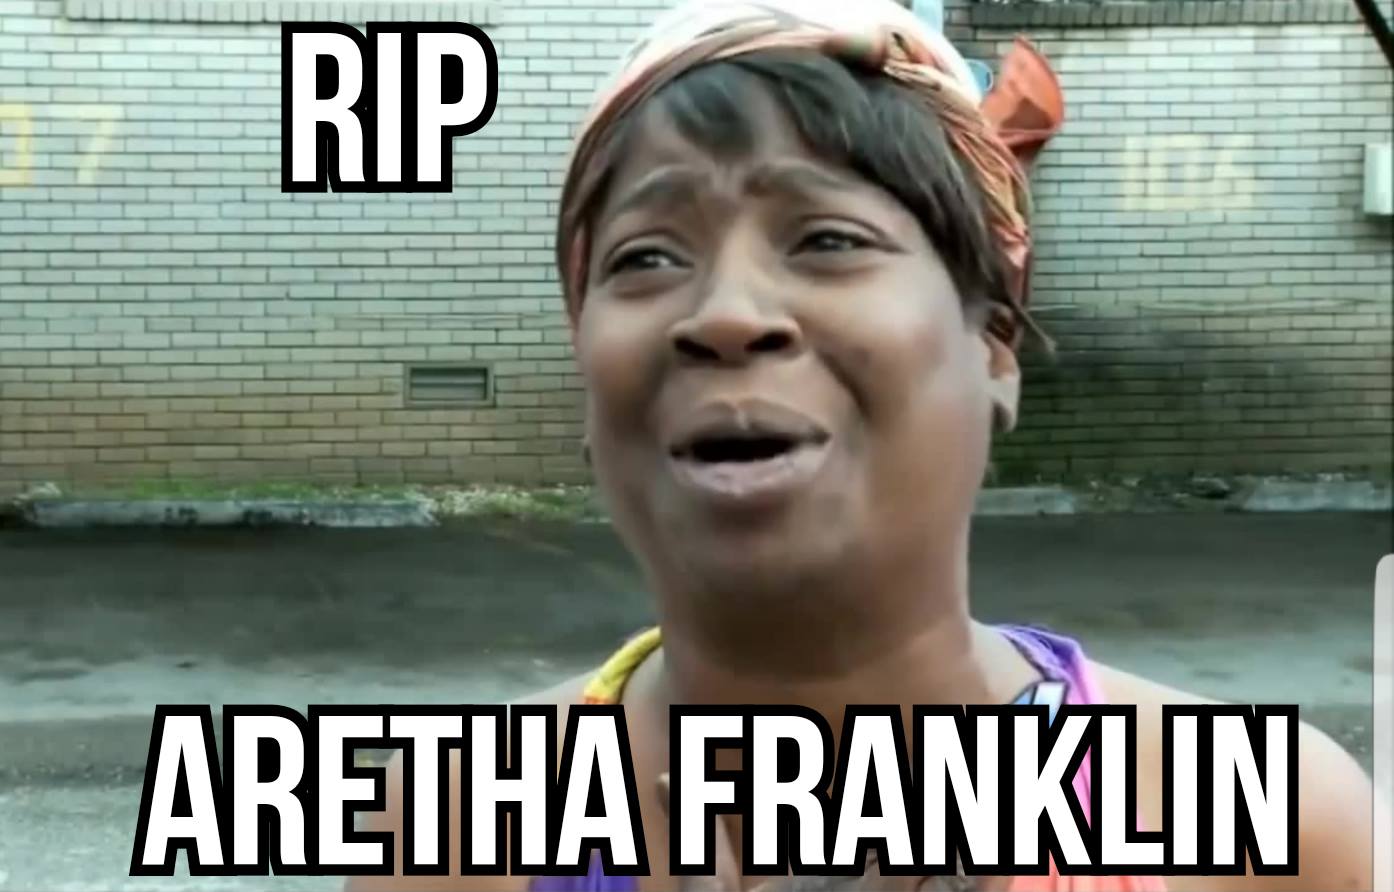 broken ankle meme - Aretha Franklin